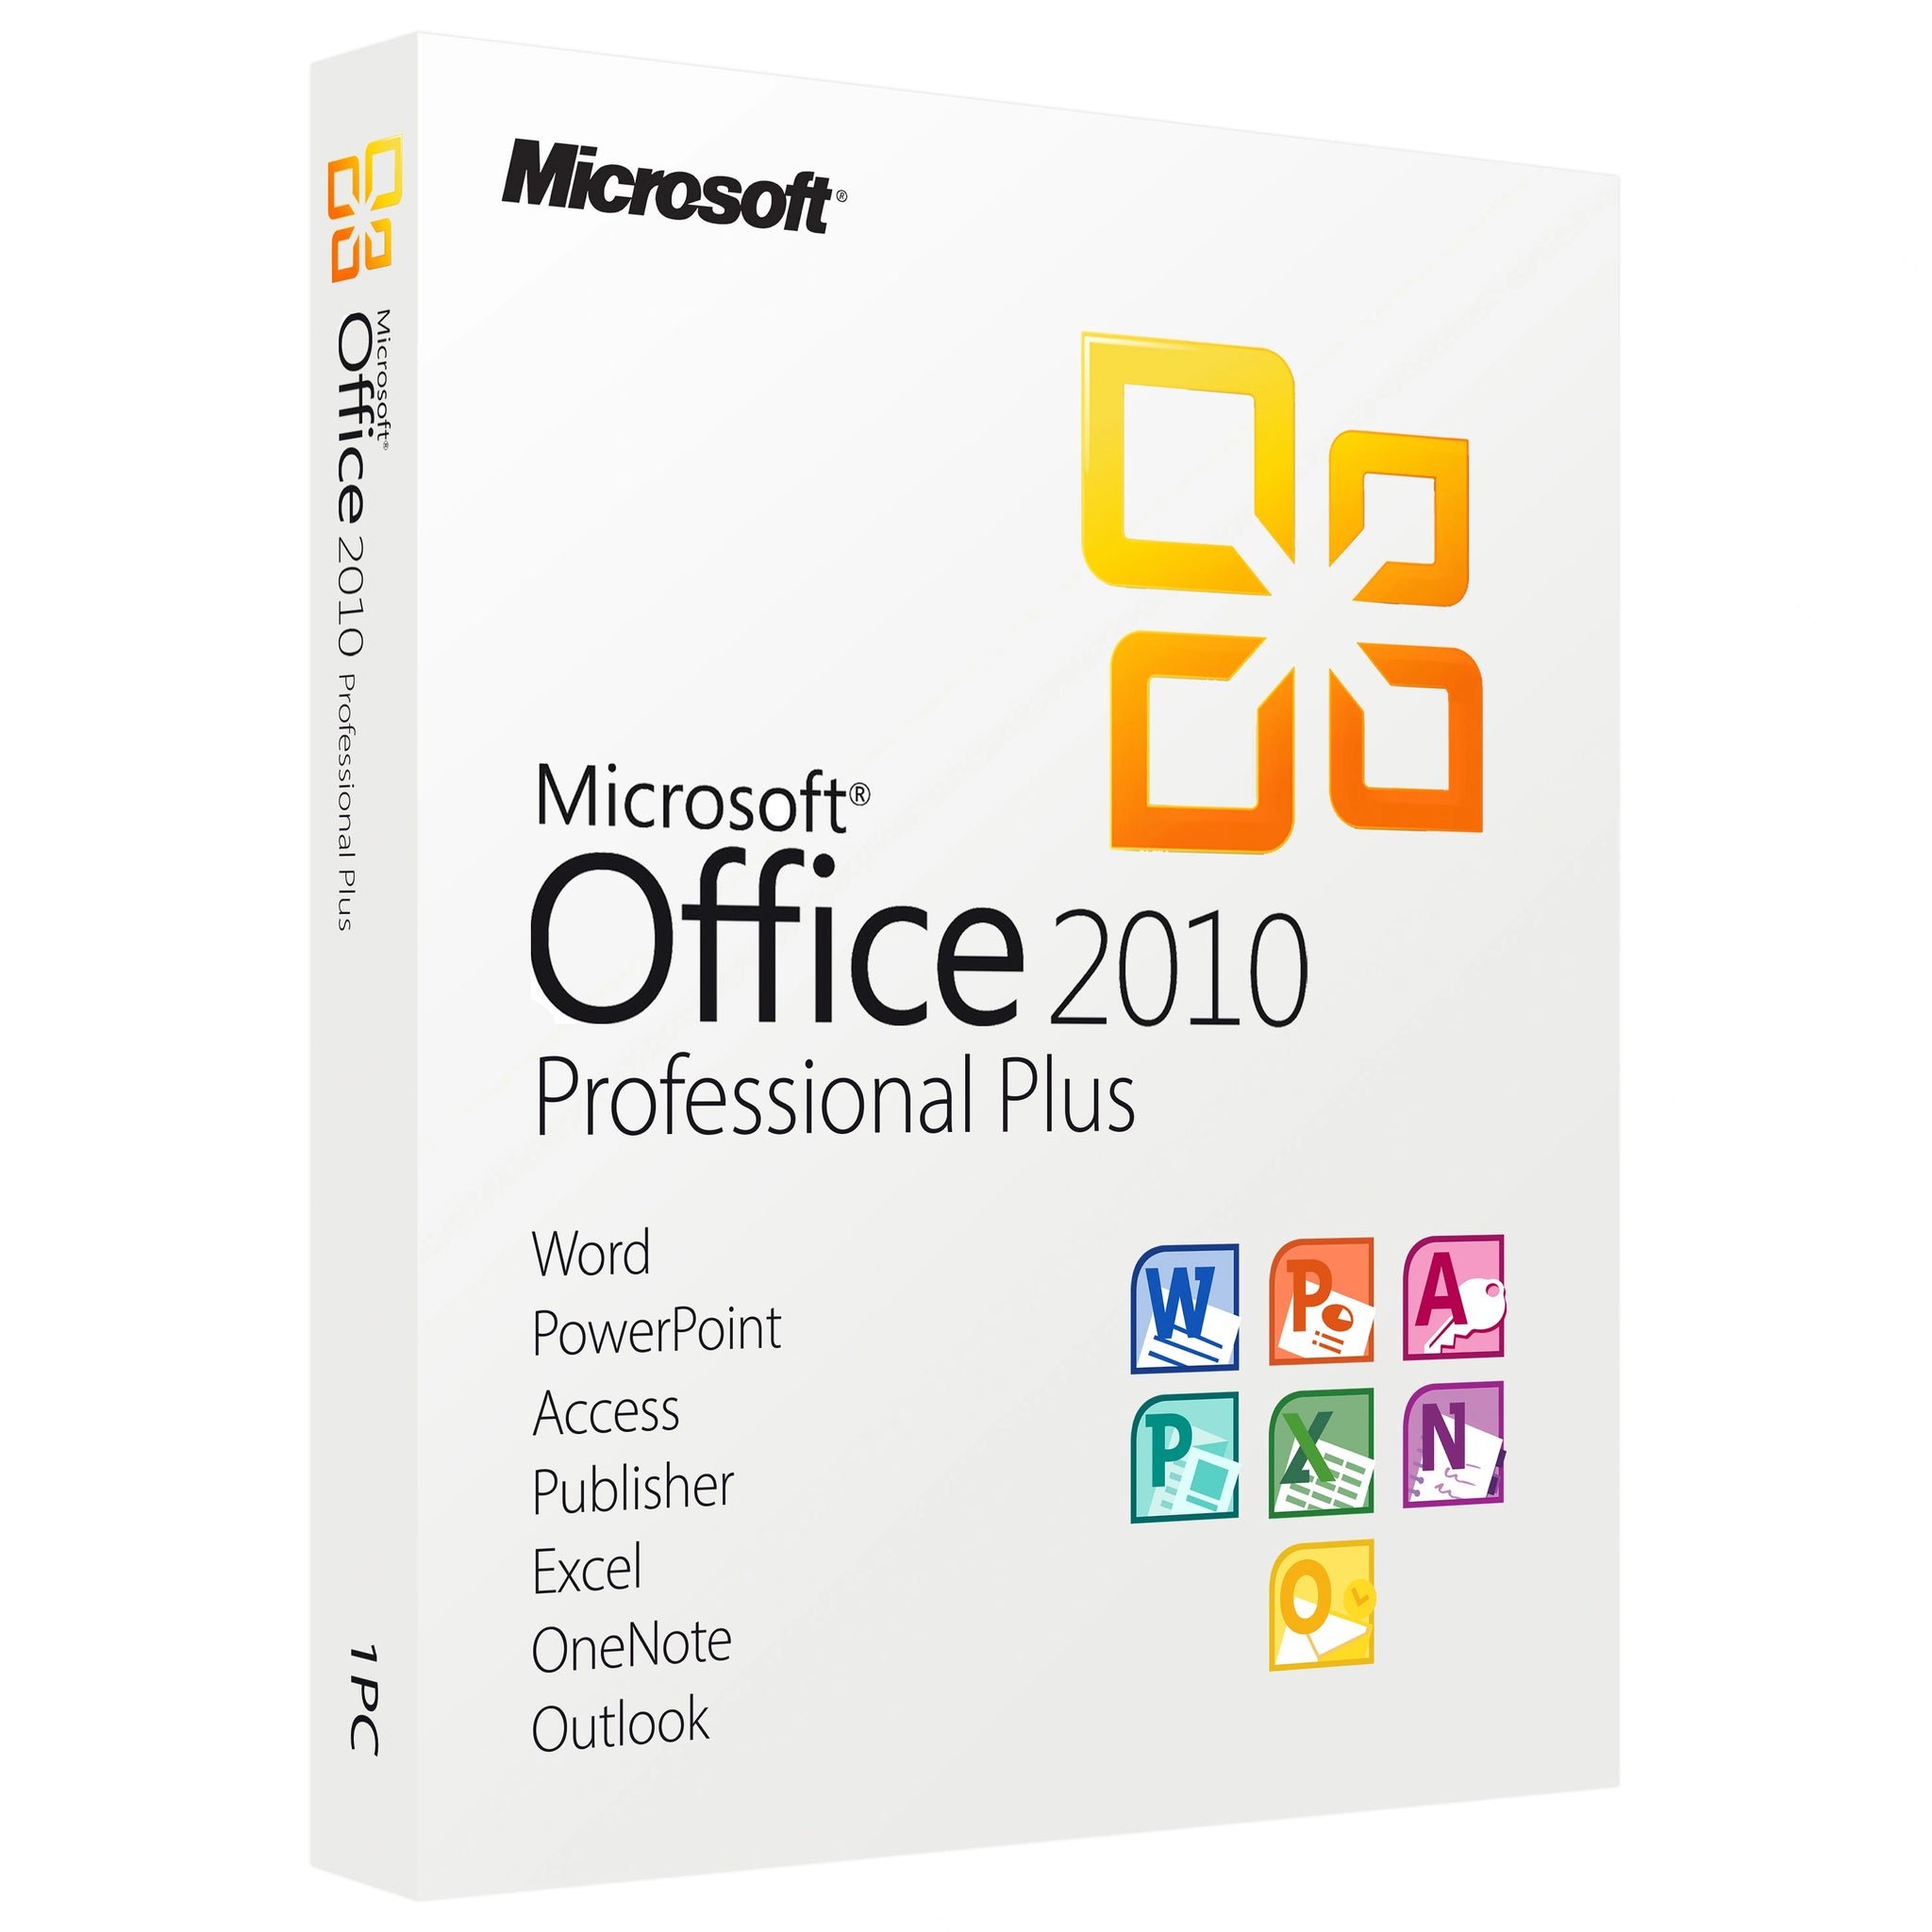 Microsoft Office 2010 Professional Plus - Lifetime License Key for 1 PC